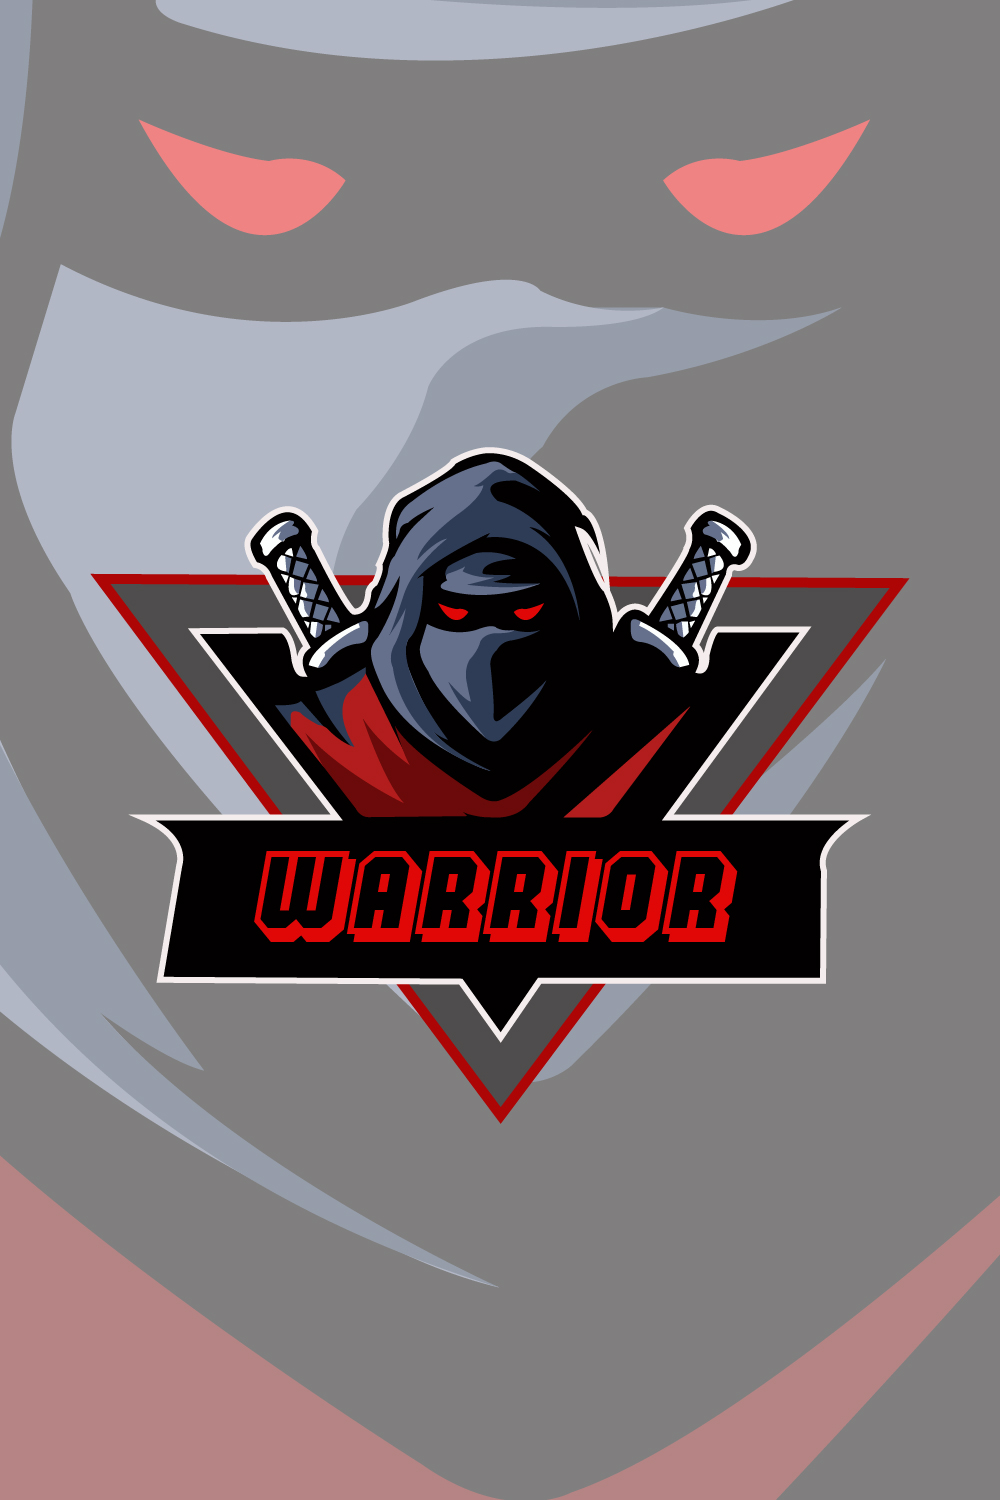 Warrior gaming mascot logo pinterest preview image.